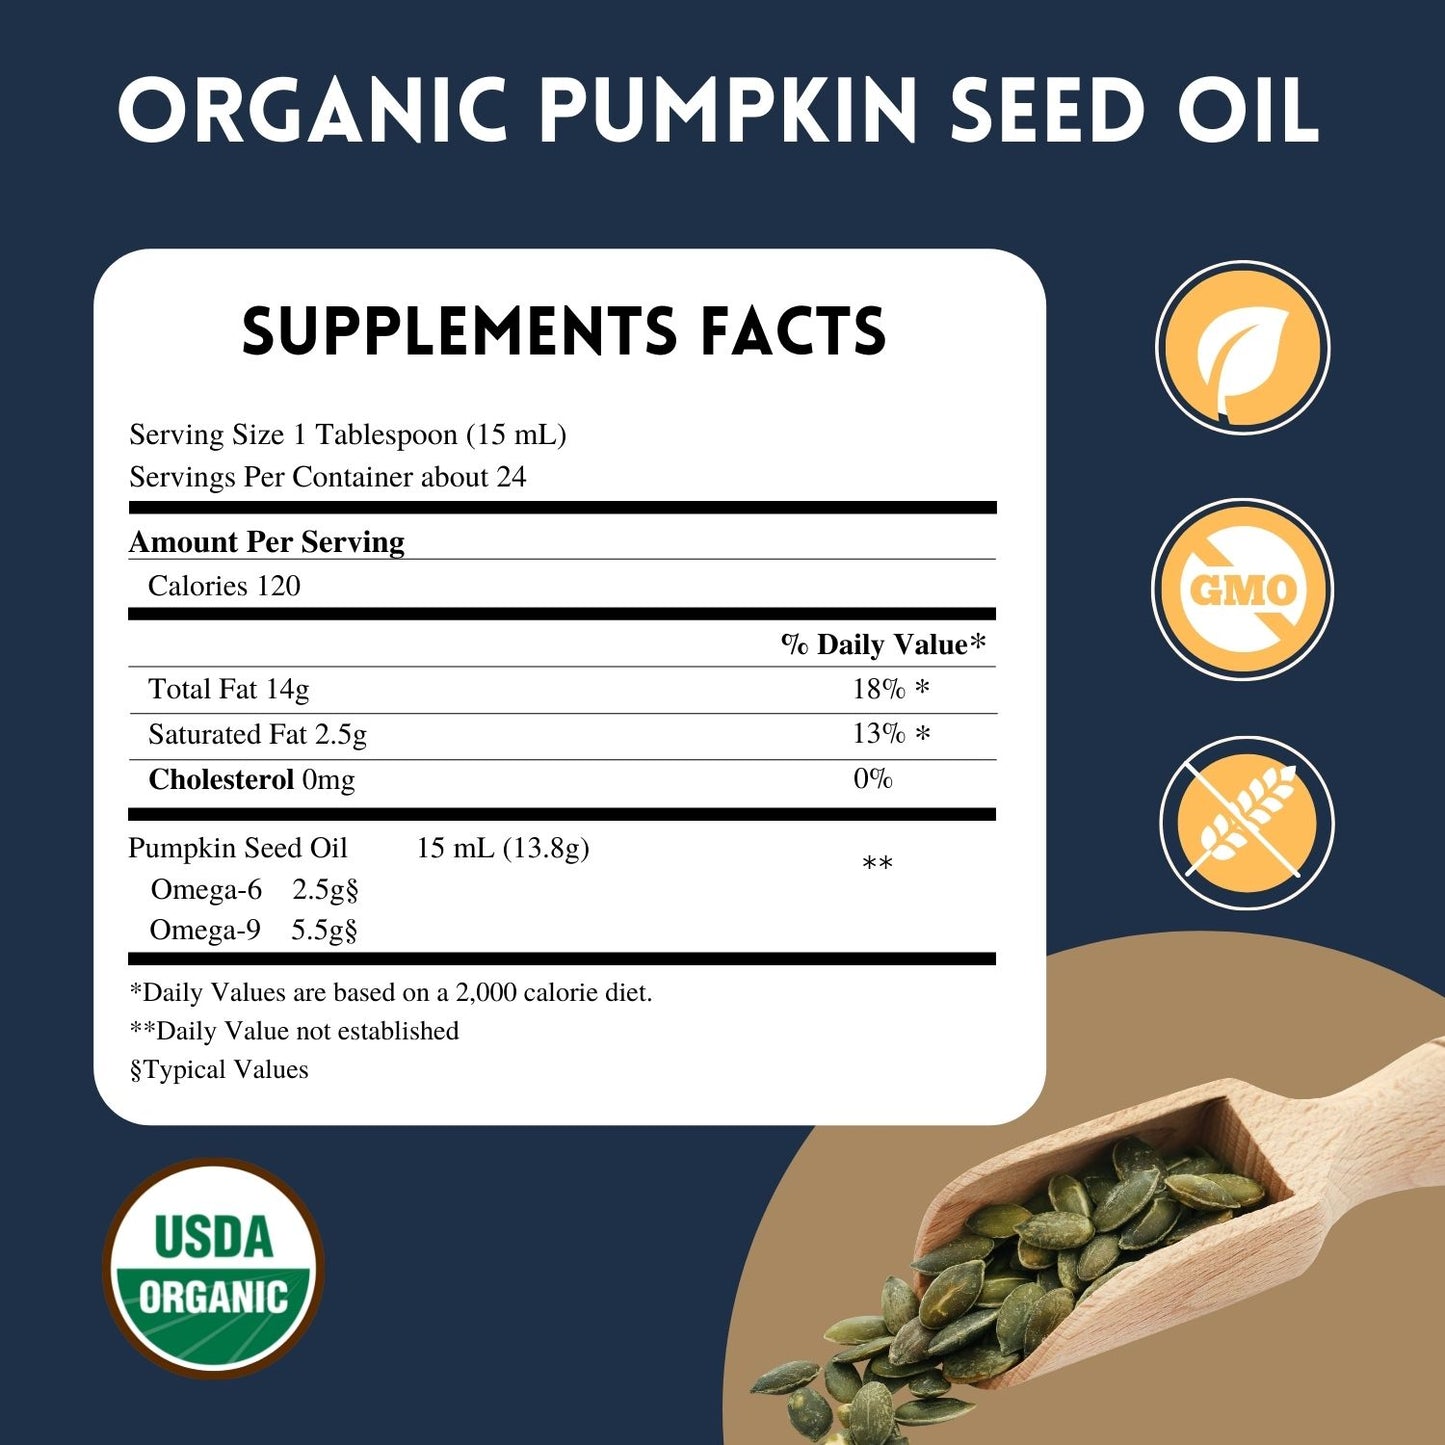 Organic Pumpkin Seed Oil!